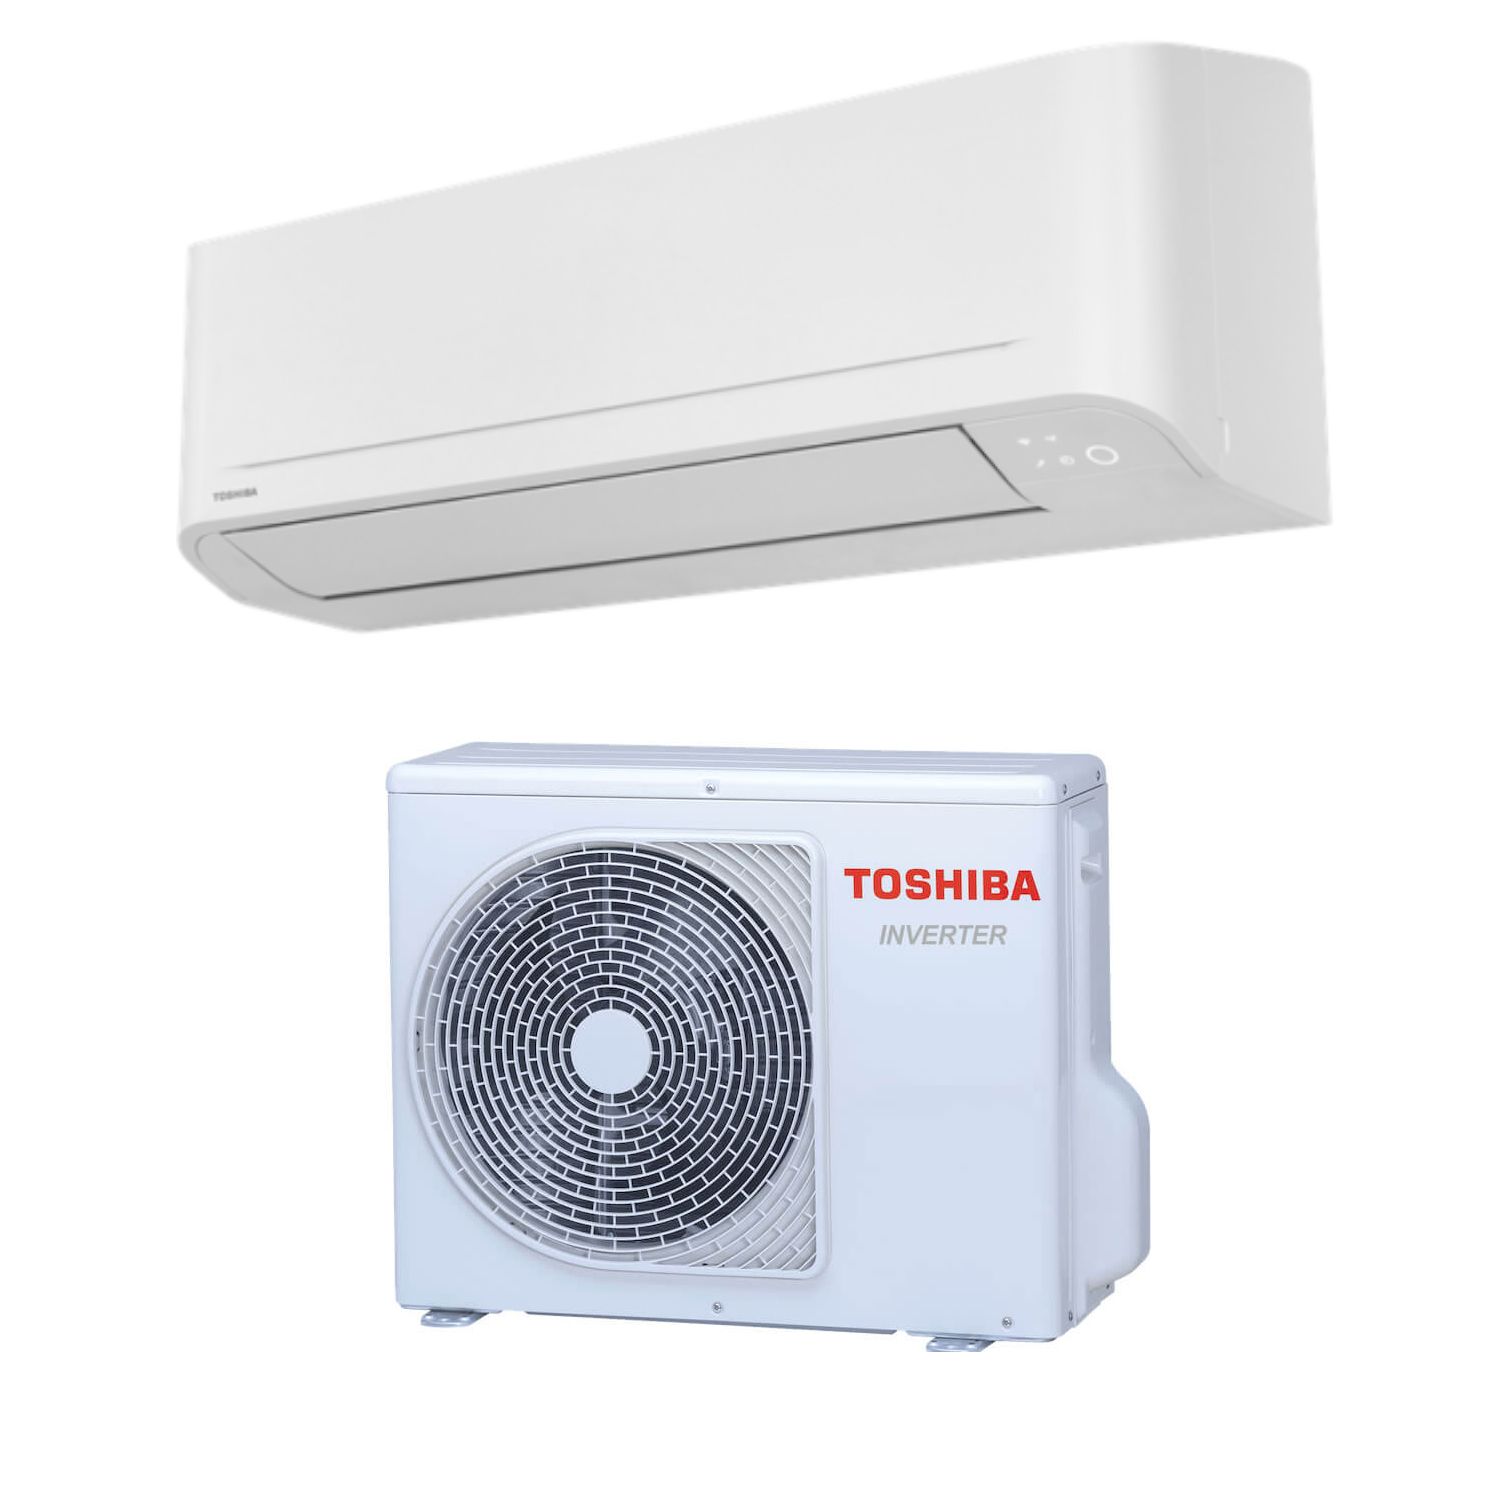 Smart Cooling Technology: Toshiba Inverter vs. Hitachi Smart Flexi